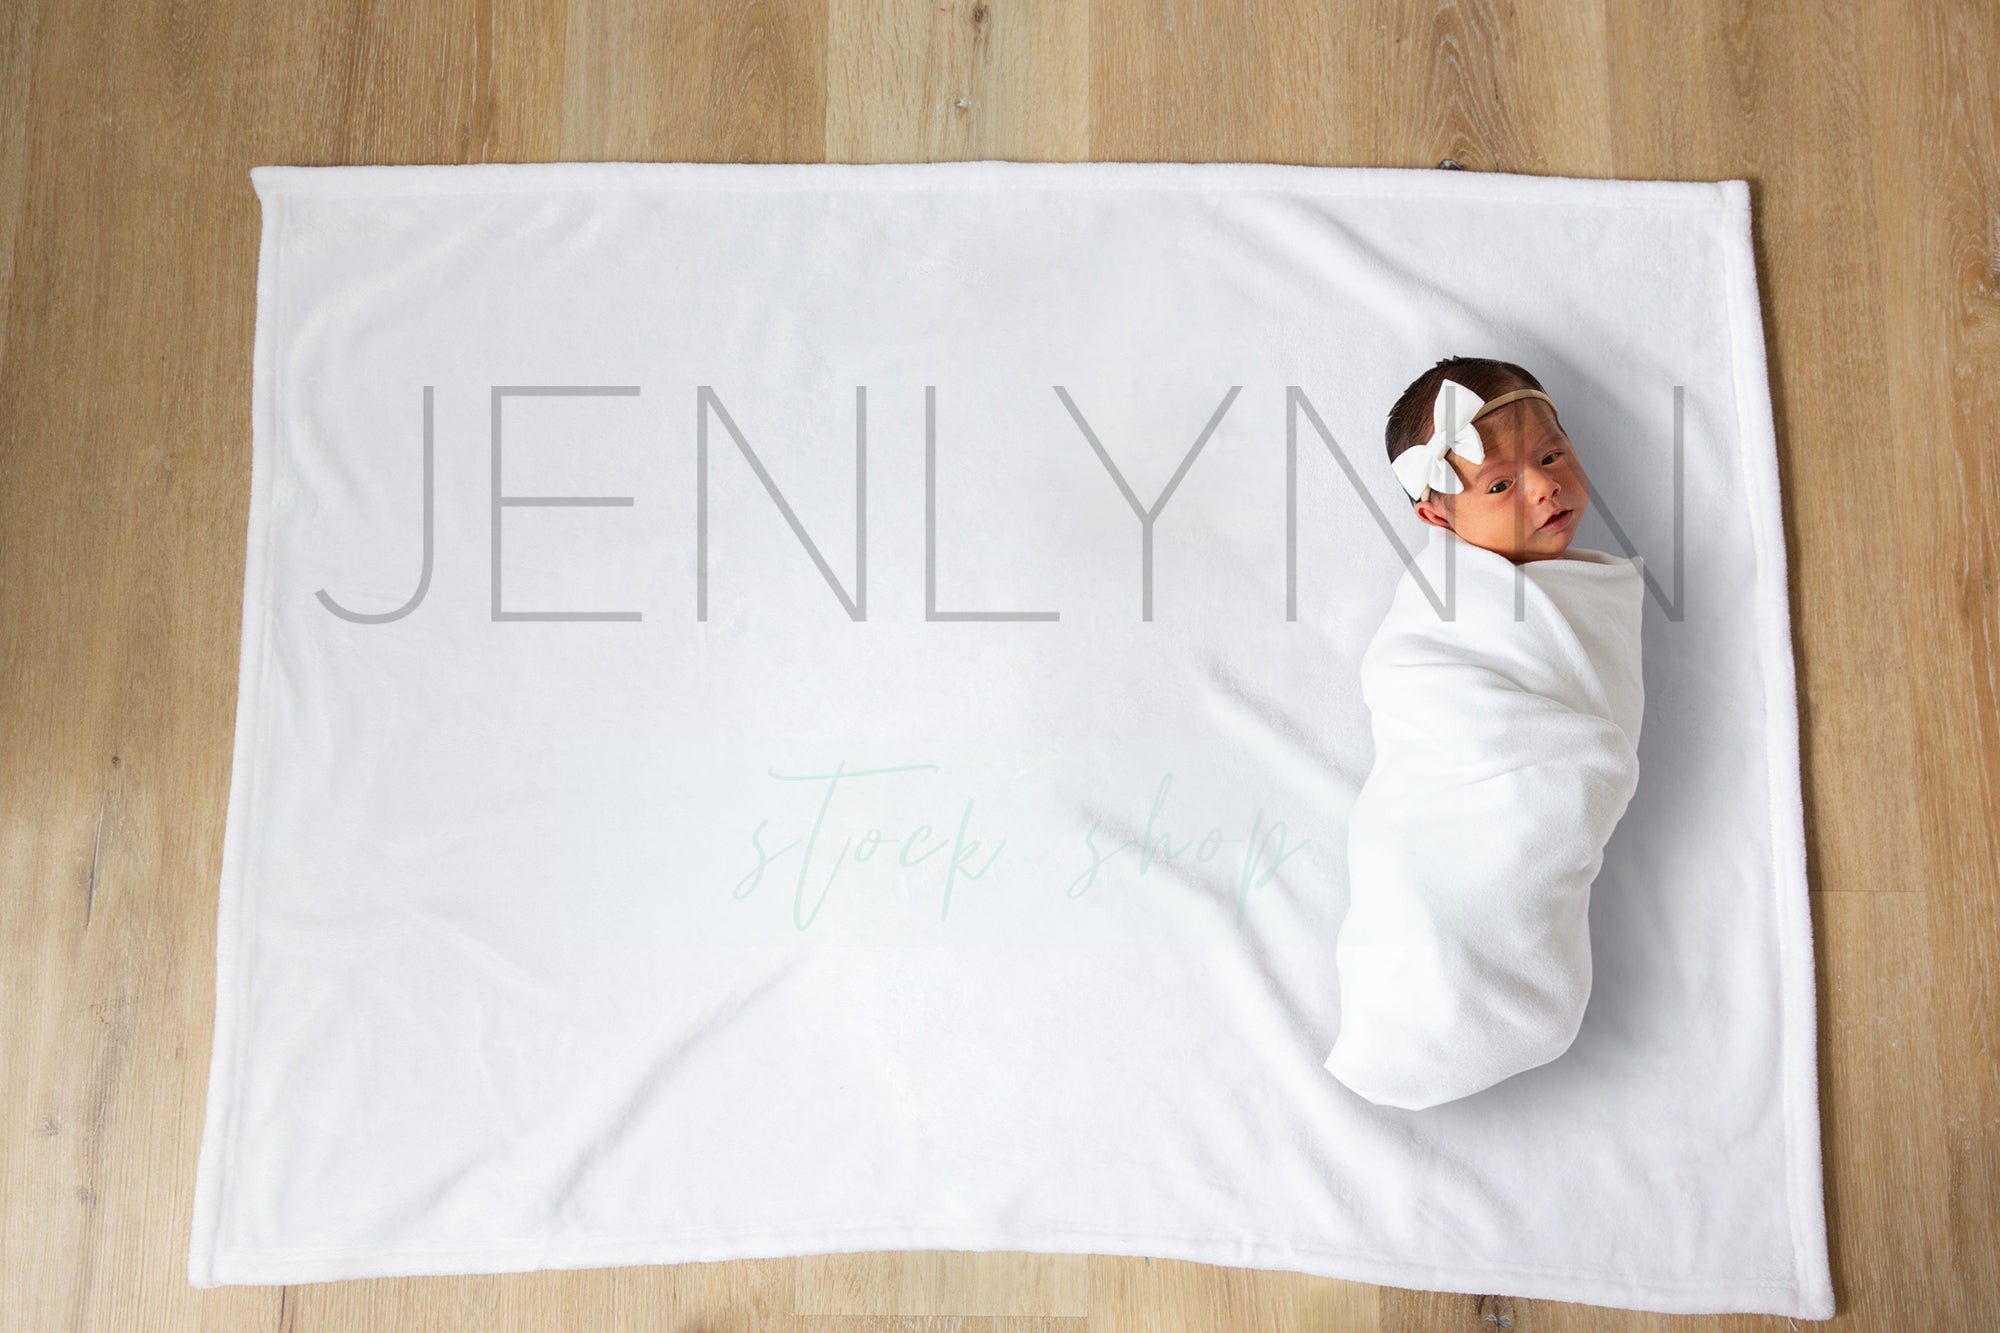 Download Horizontal Milestone Baby Girl Blanket Mockup Gg01 Psd Jenlynn Stock Shop